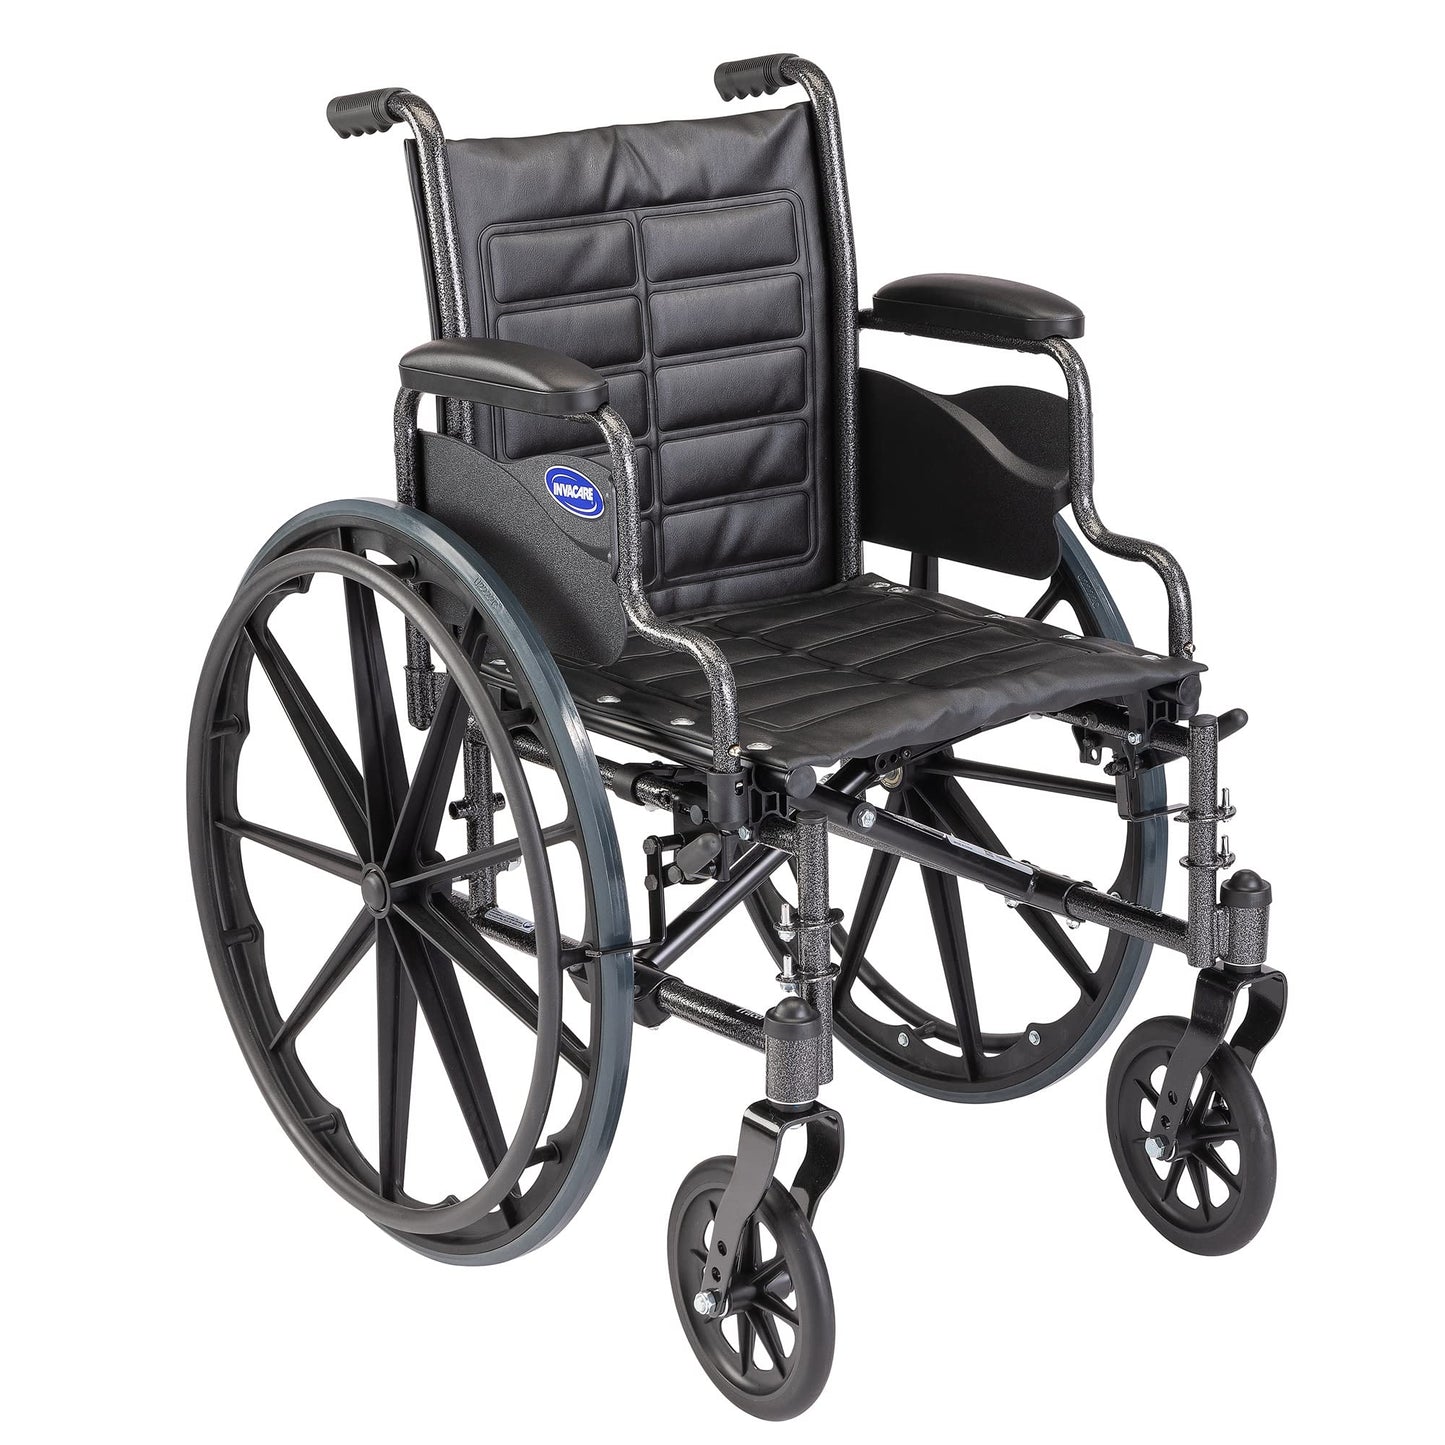 Rental Standard Wheelchair